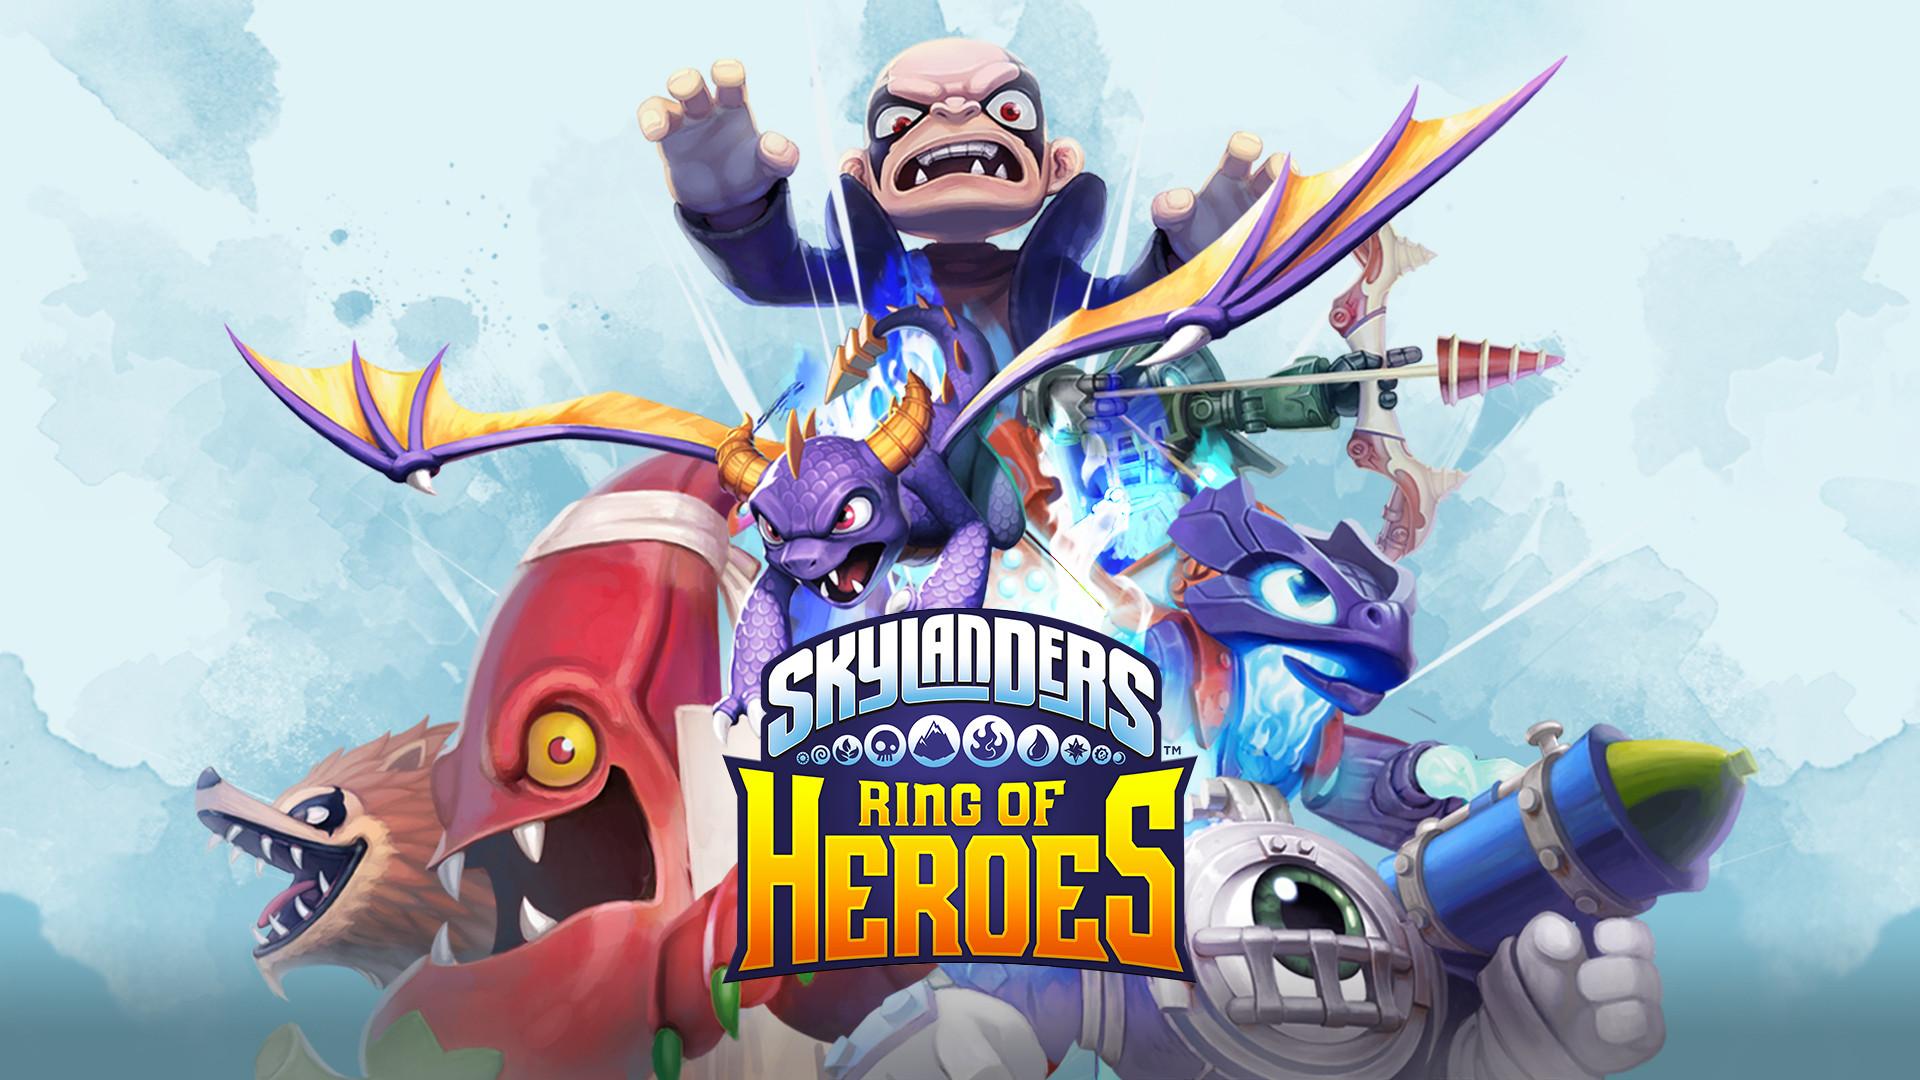 Skylanders Ring of Heroes is Now Globally Available